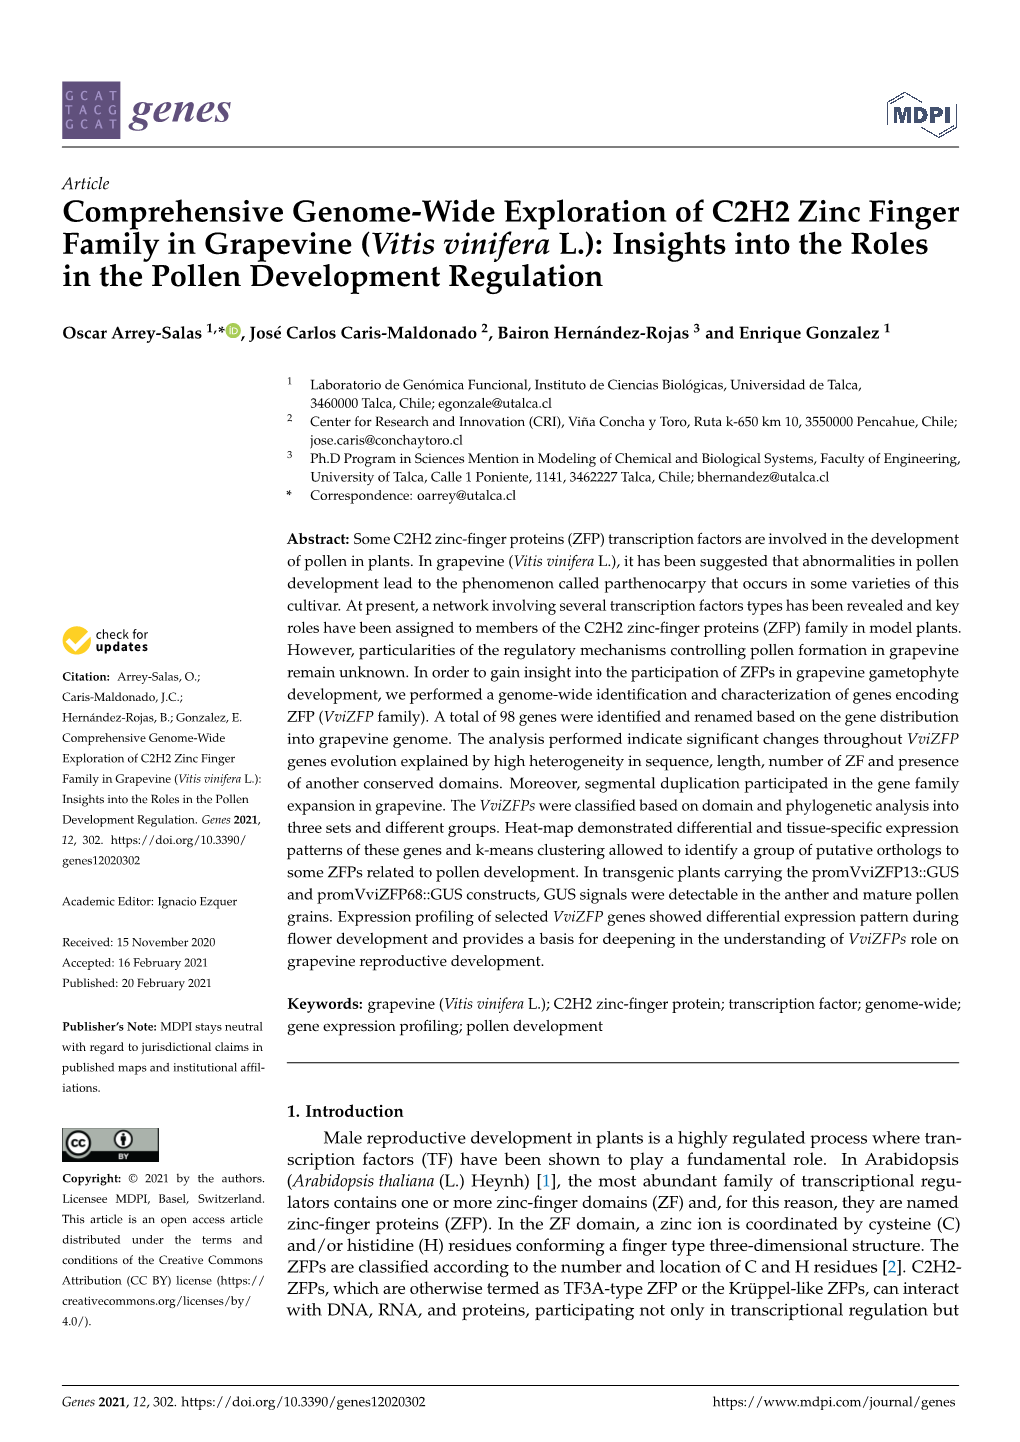 Comprehensive Genome-Wide Exploration of C2H2 Zinc Finger Family in Grapevine (Vitis Vinifera L.): Insights Into the Roles in the Pollen Development Regulation